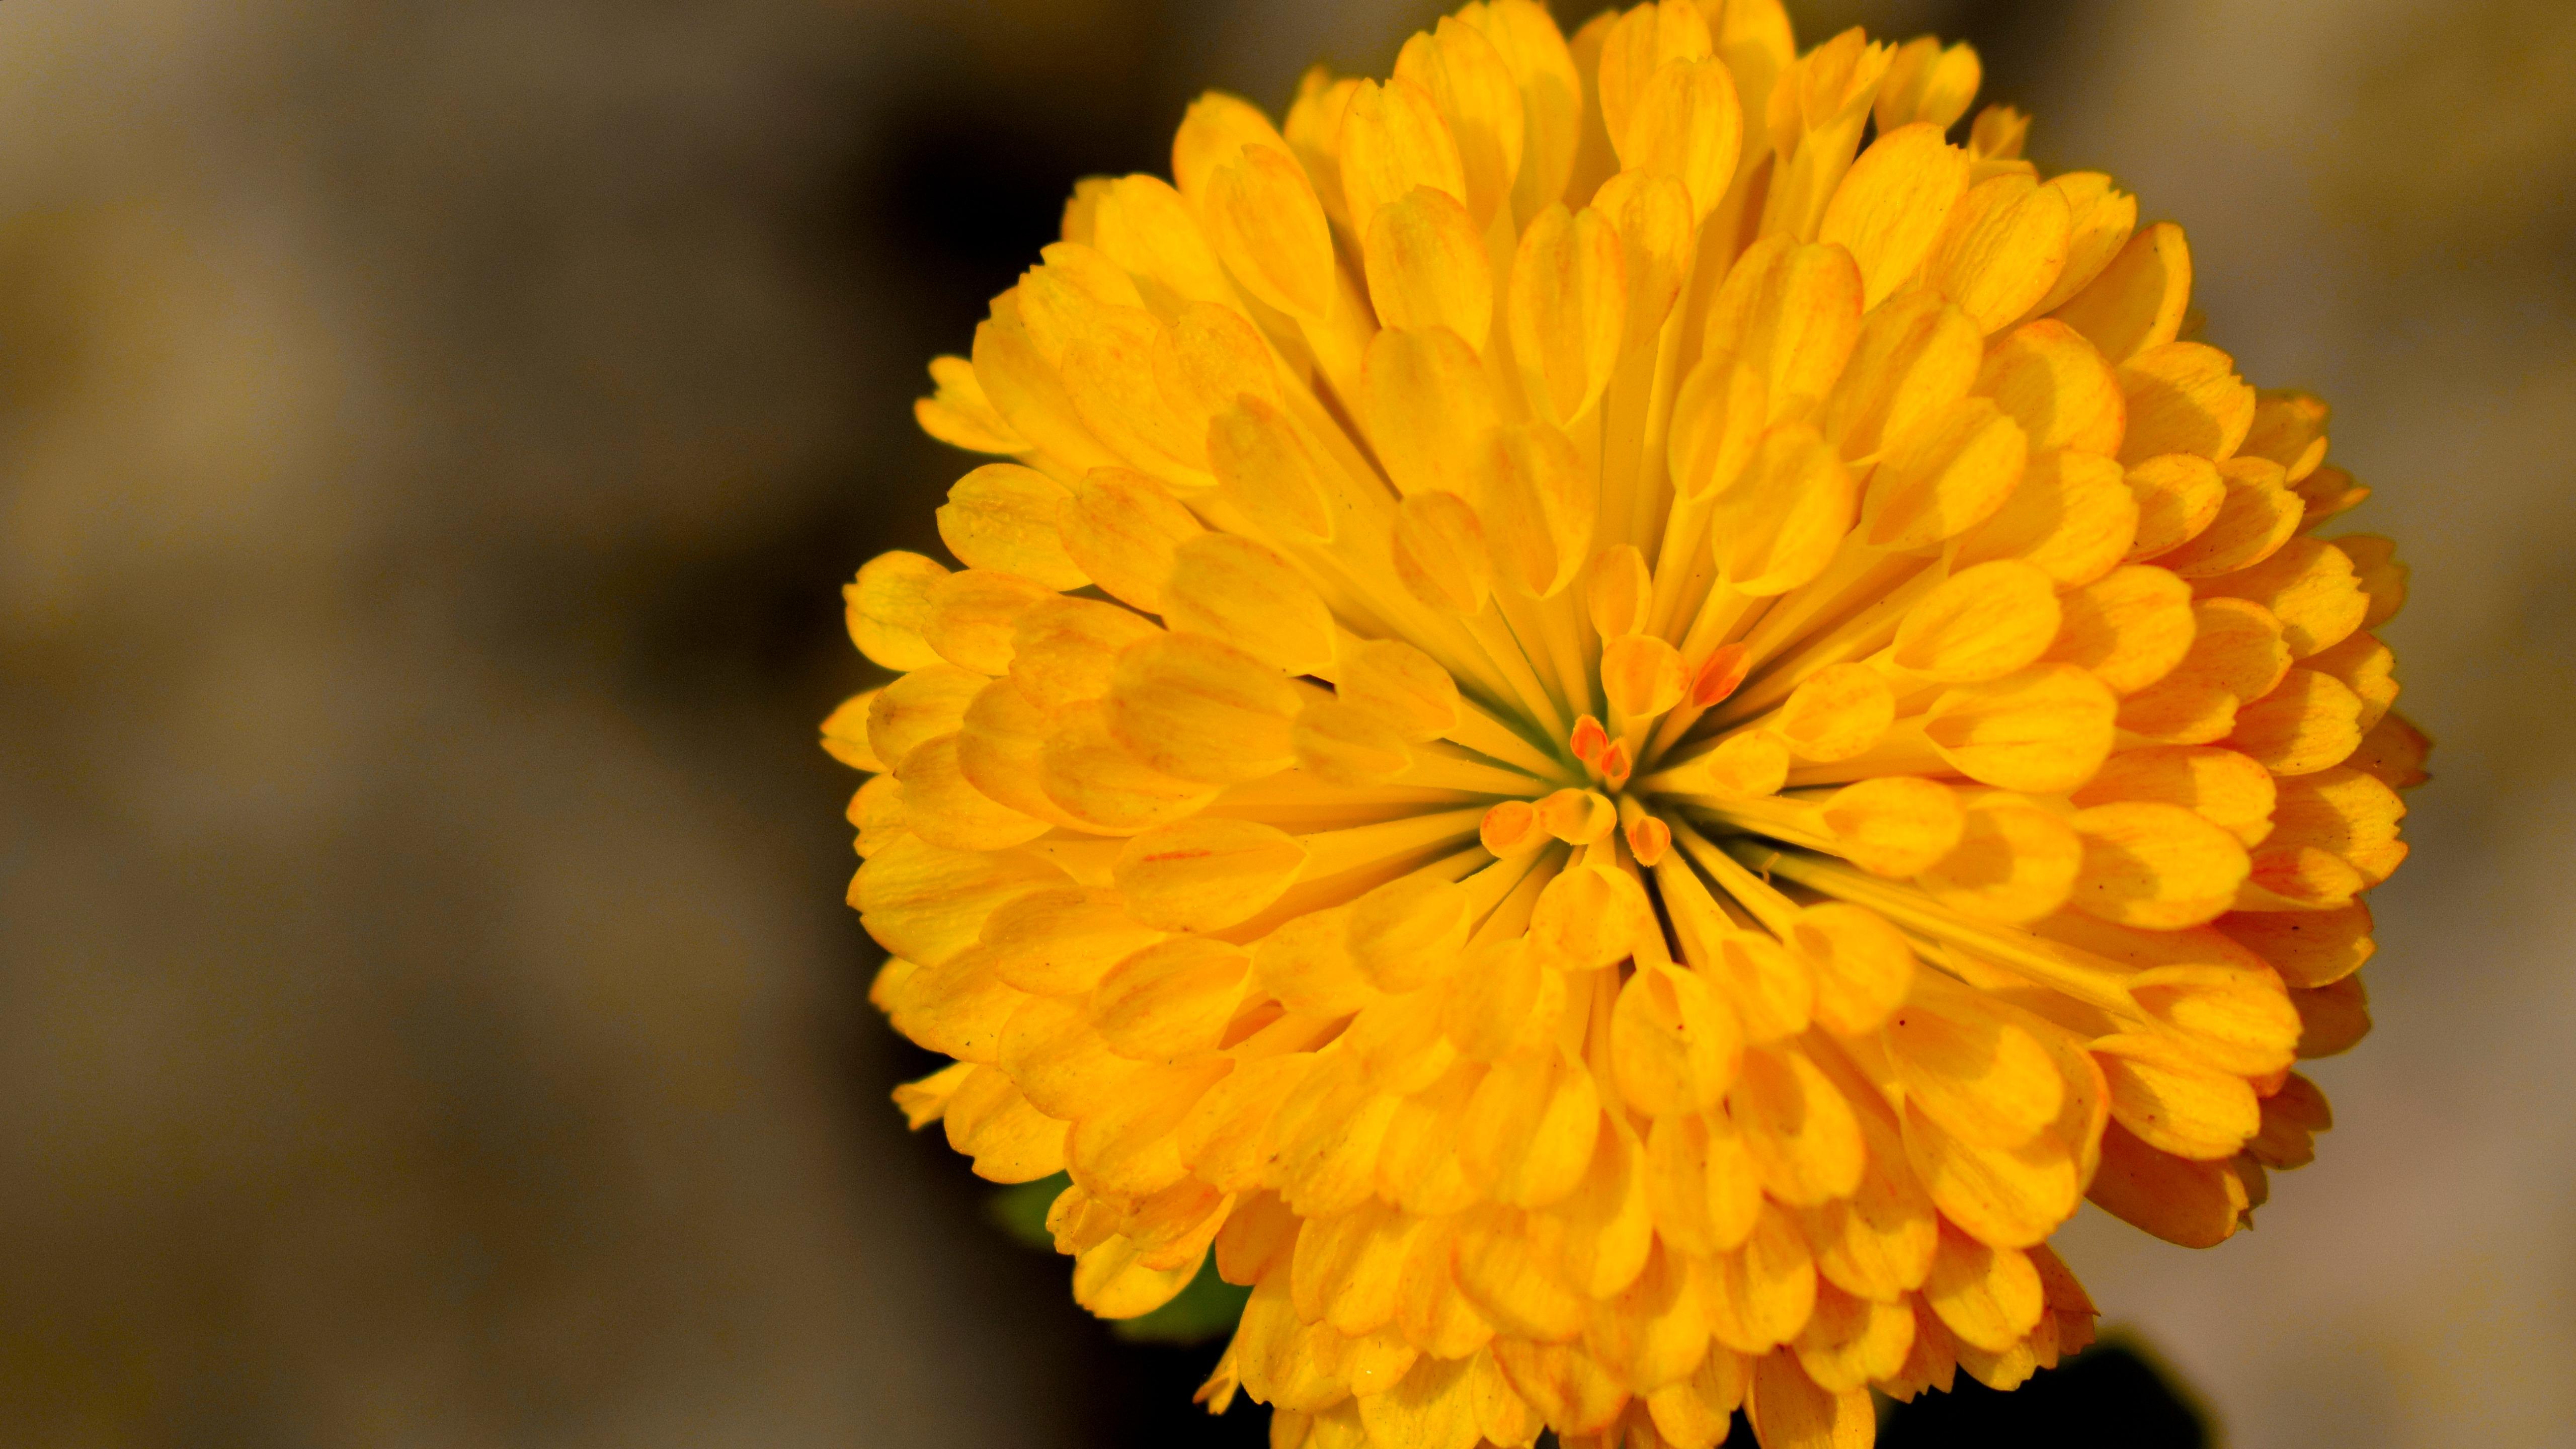 461868 descargar imagen tierra/naturaleza, crisantemo, flor, amarillo, flores: fondos de pantalla y protectores de pantalla gratis